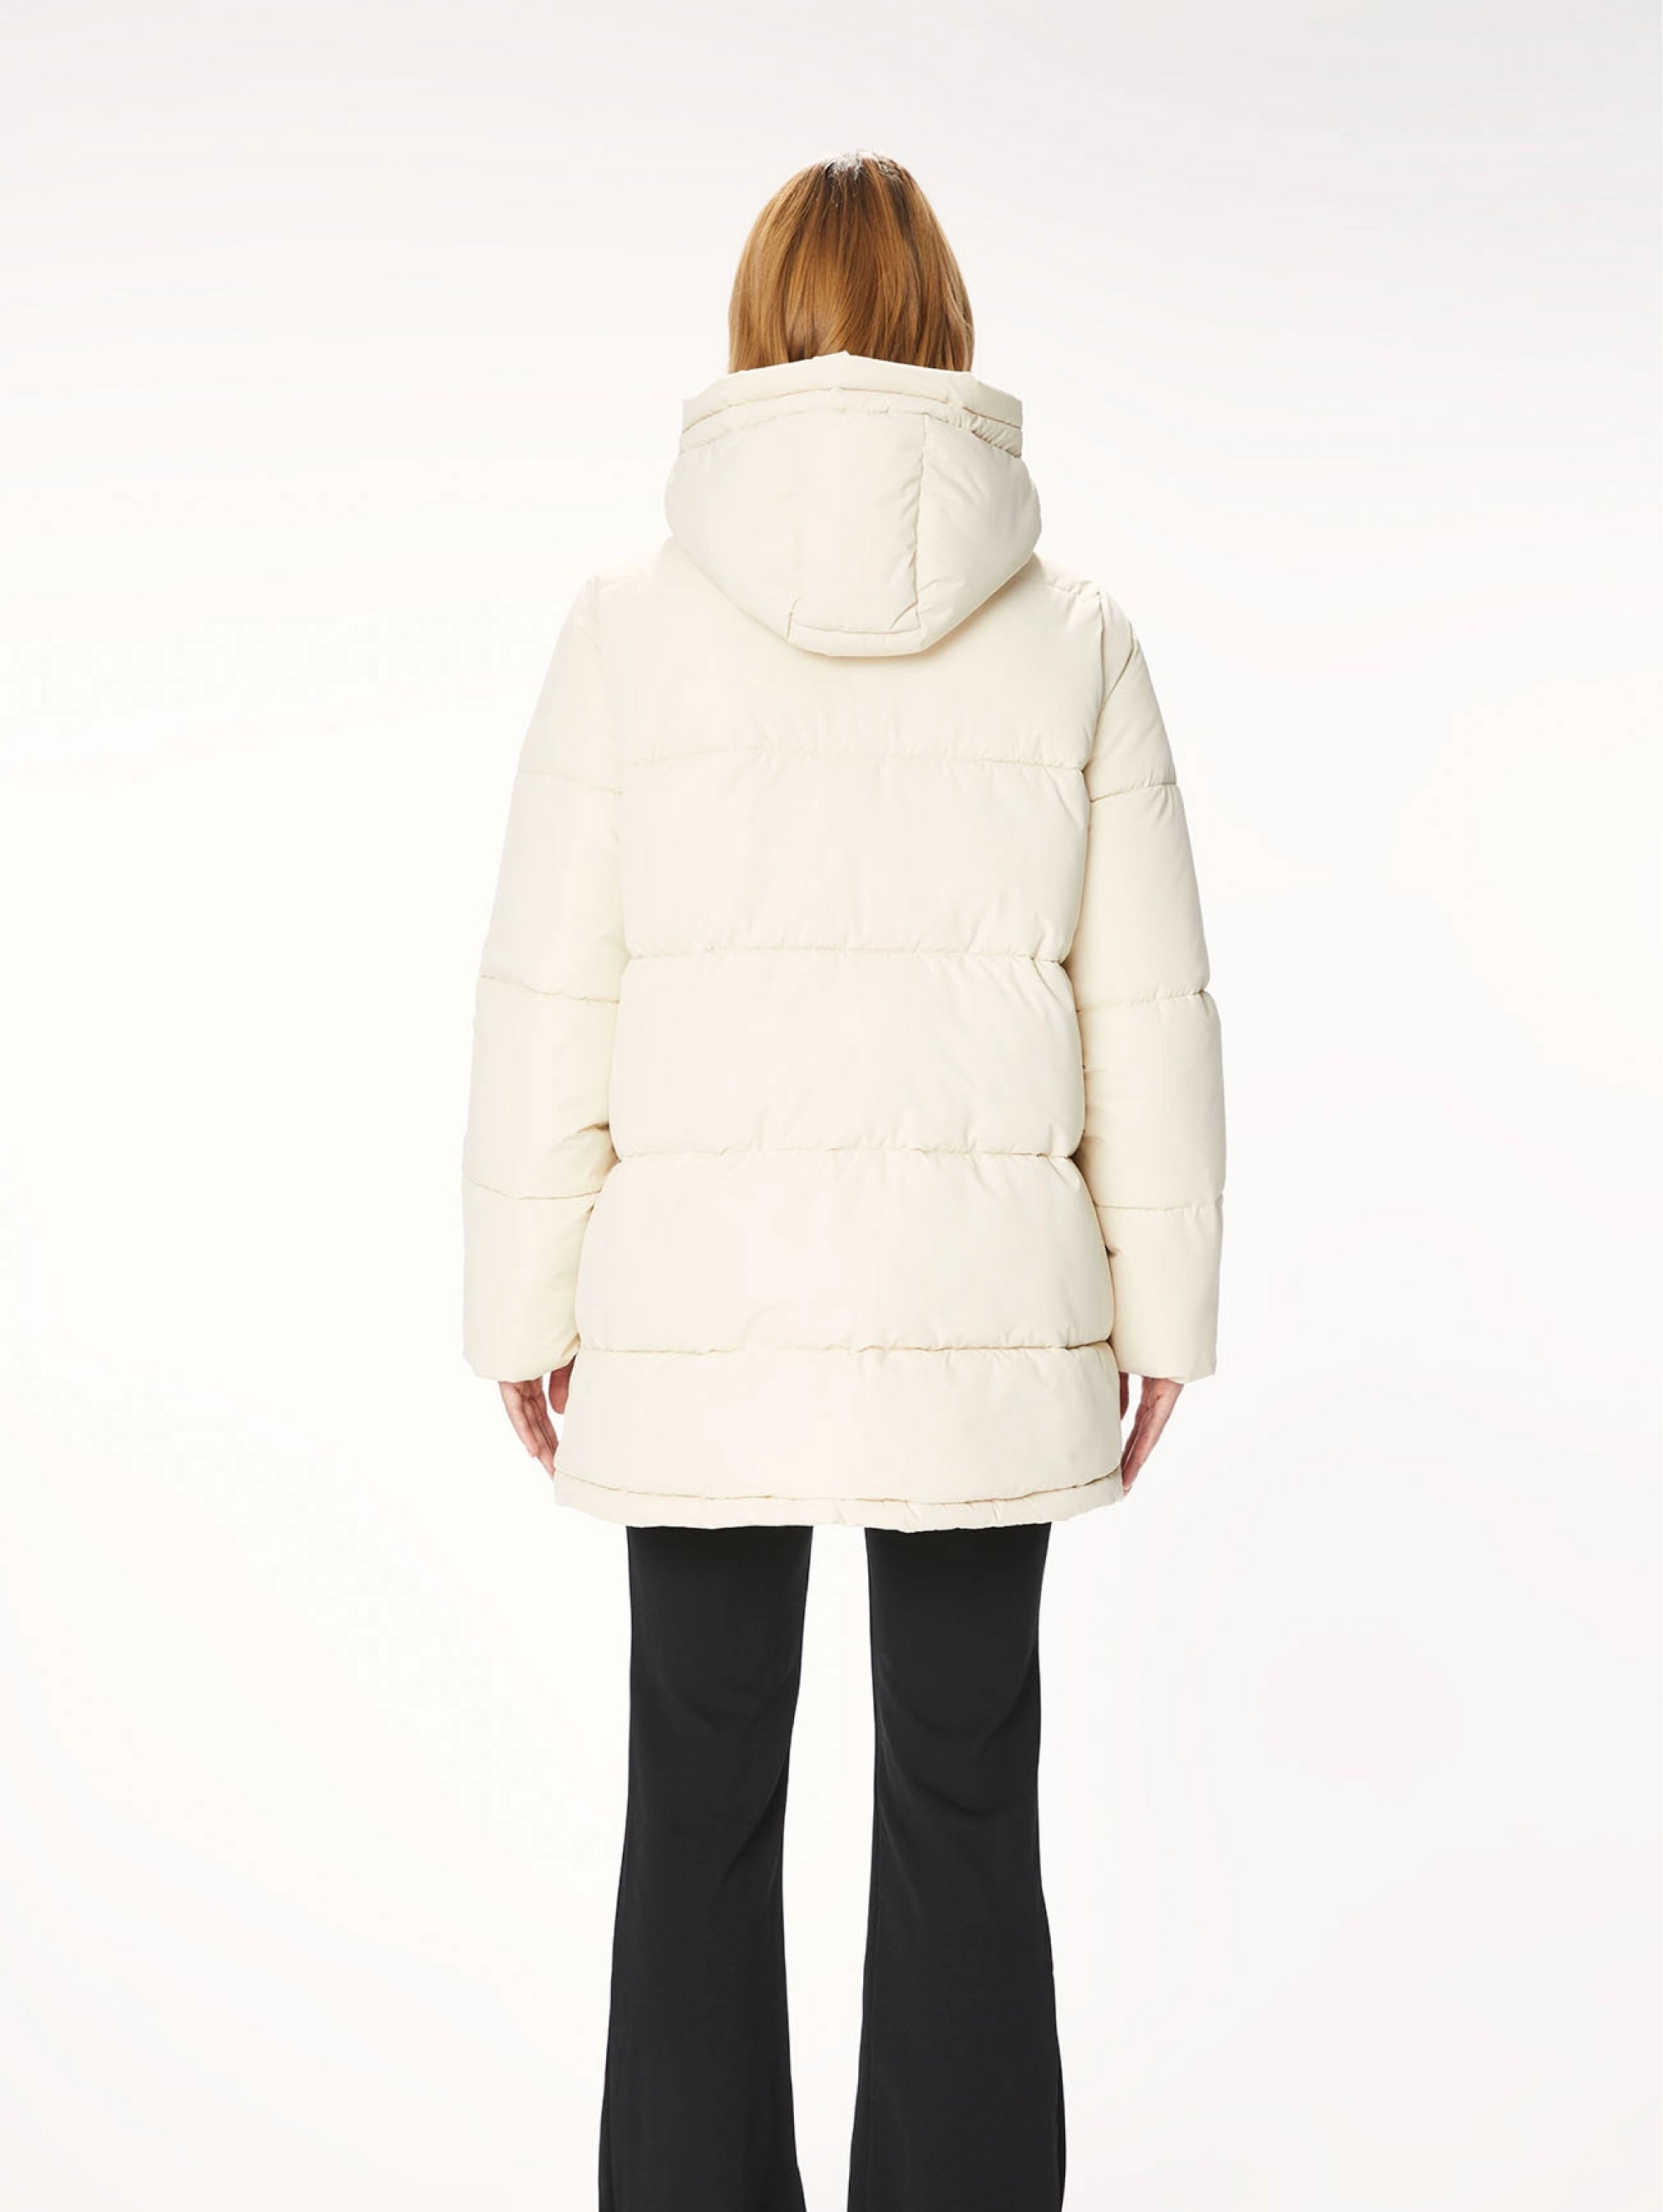 Nylon Jacket with Cream Hood